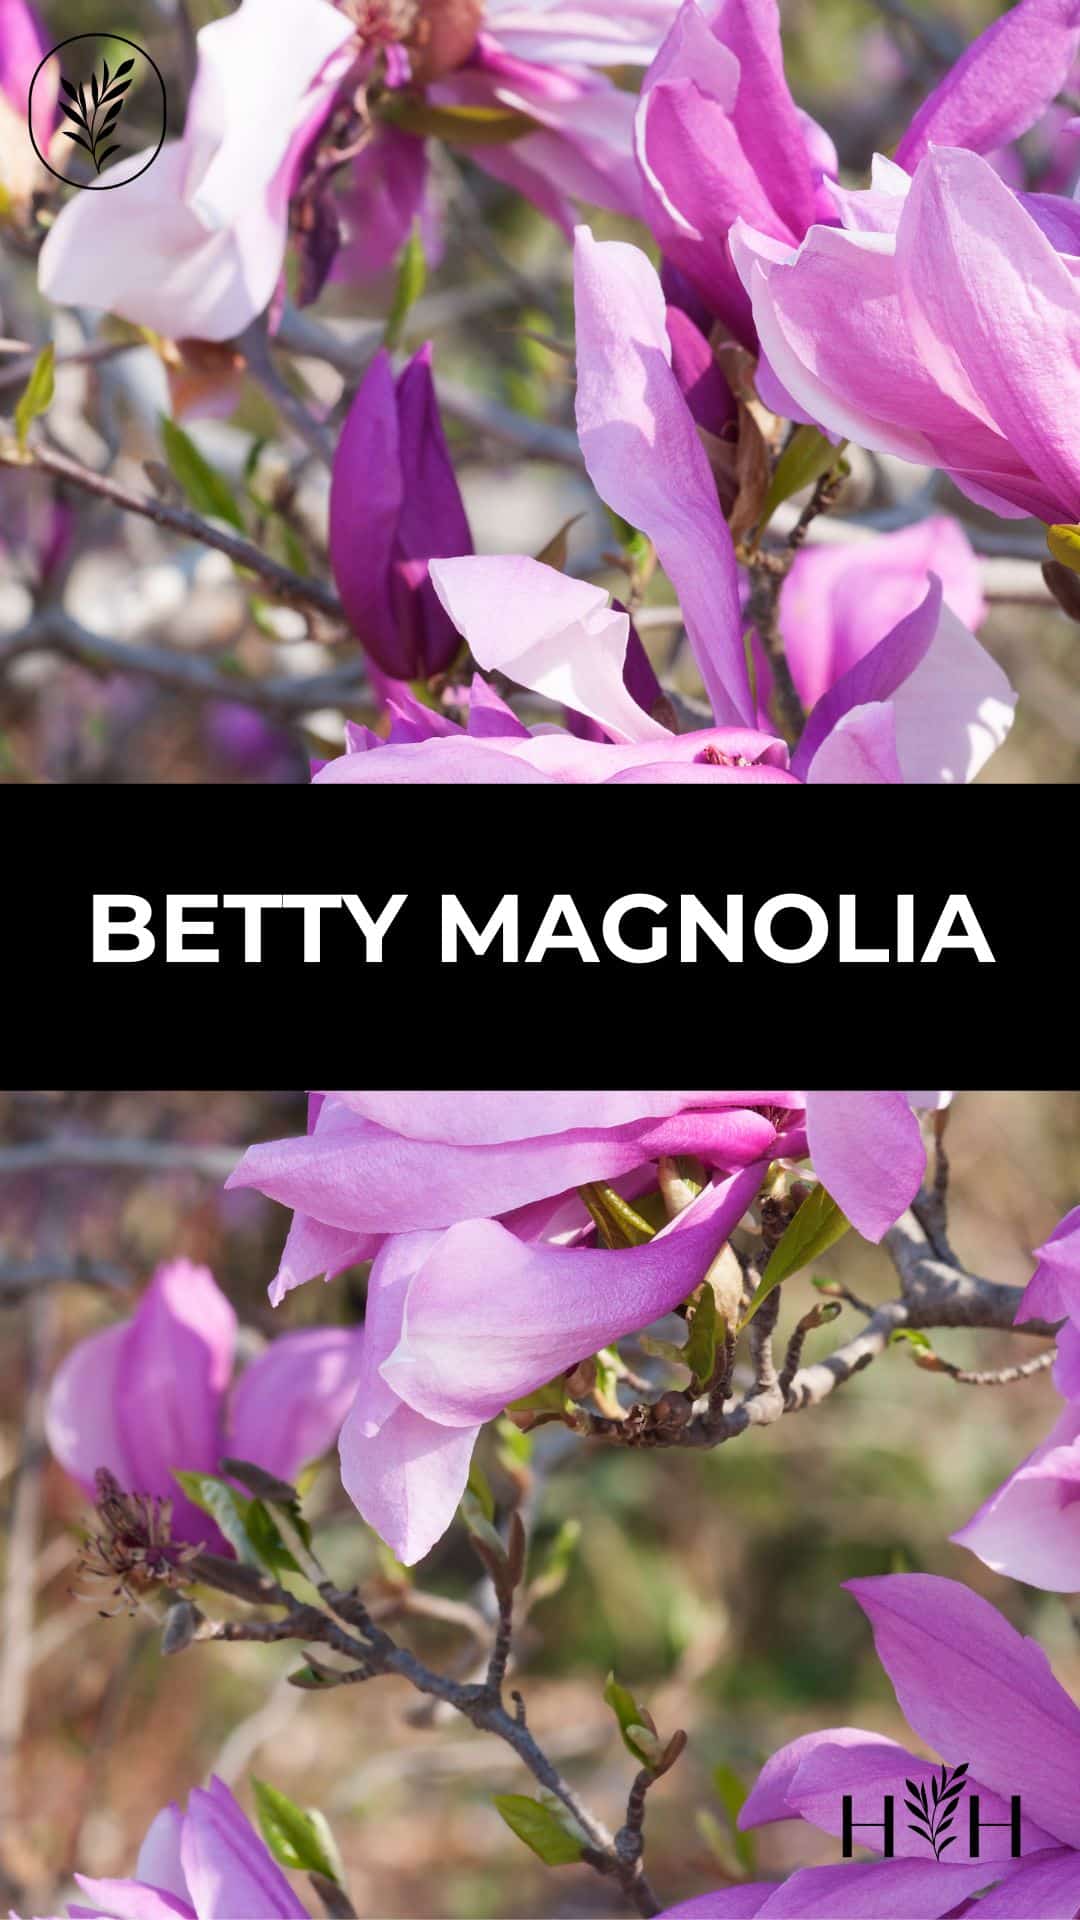 Betty magnolia via @home4theharvest